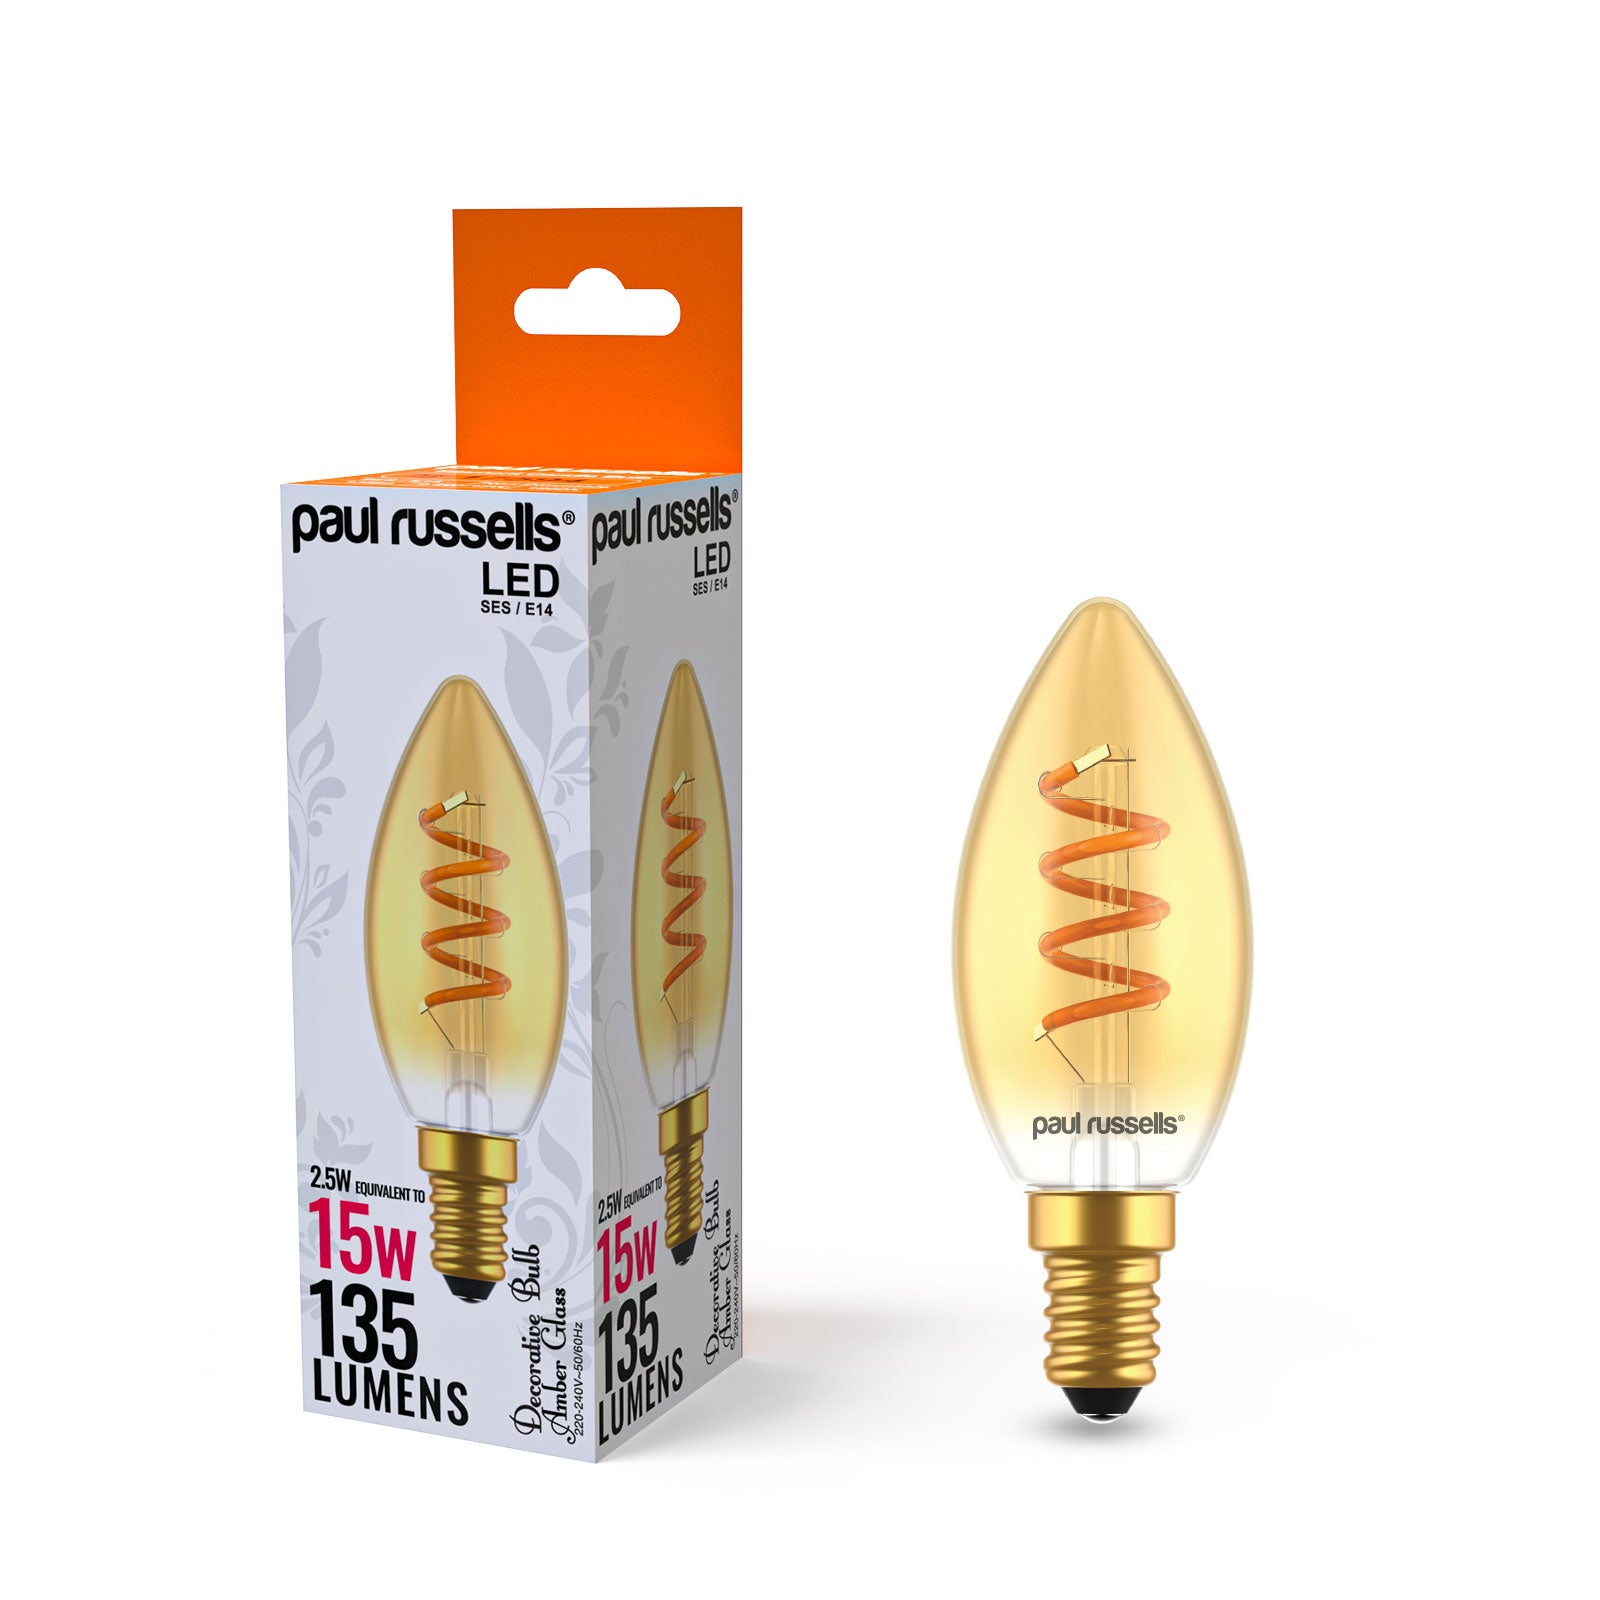 LED Filament Spiral Candle 2.5W=15w Extra Warm White (AMBER) SES E14 Small Edison Screw Decorative Bulbs